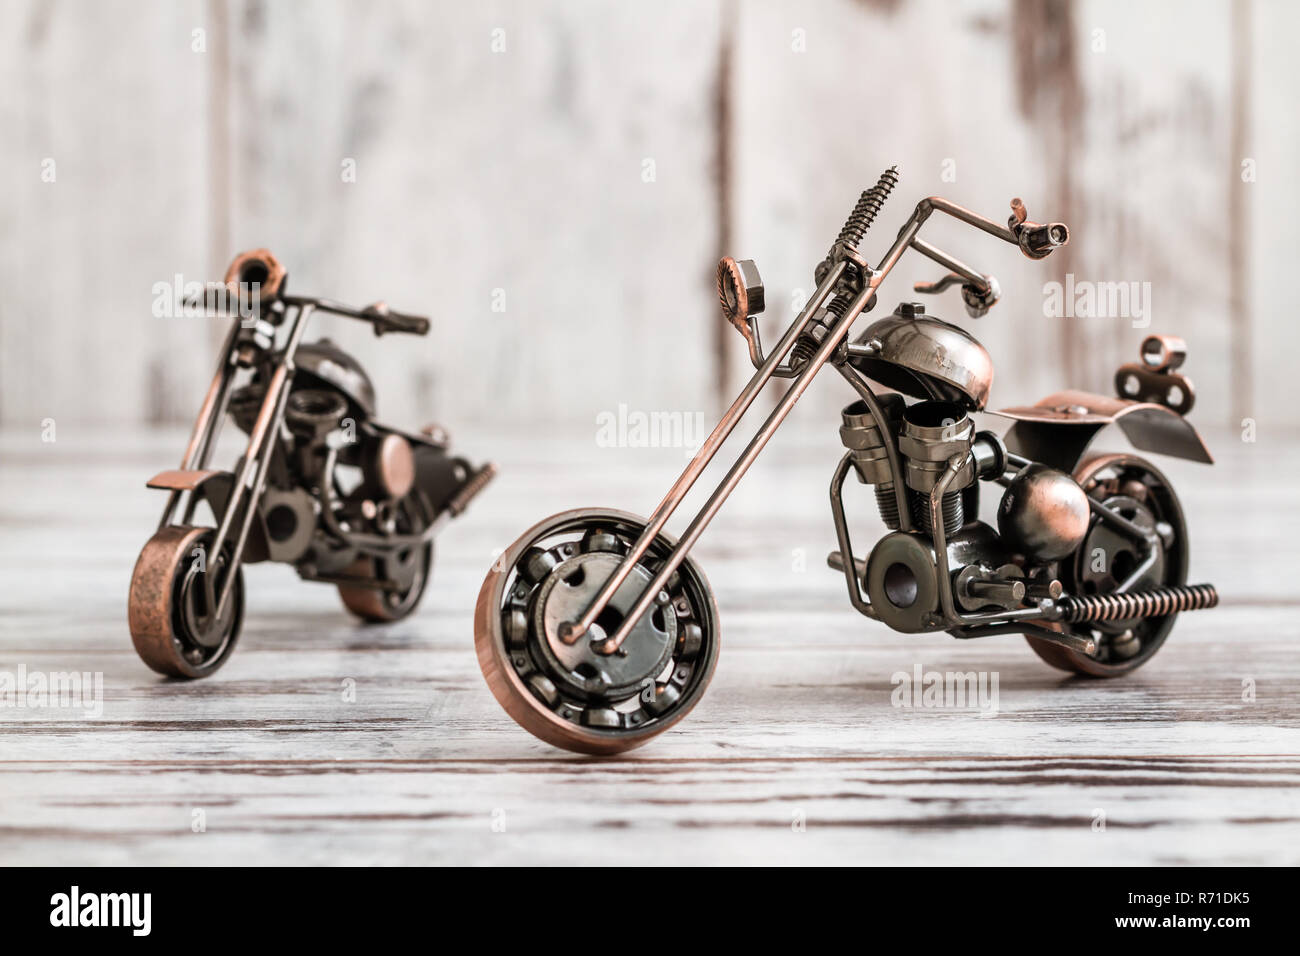 Mini Metal Model Motorcycle on White Wooden Background Stock Photo